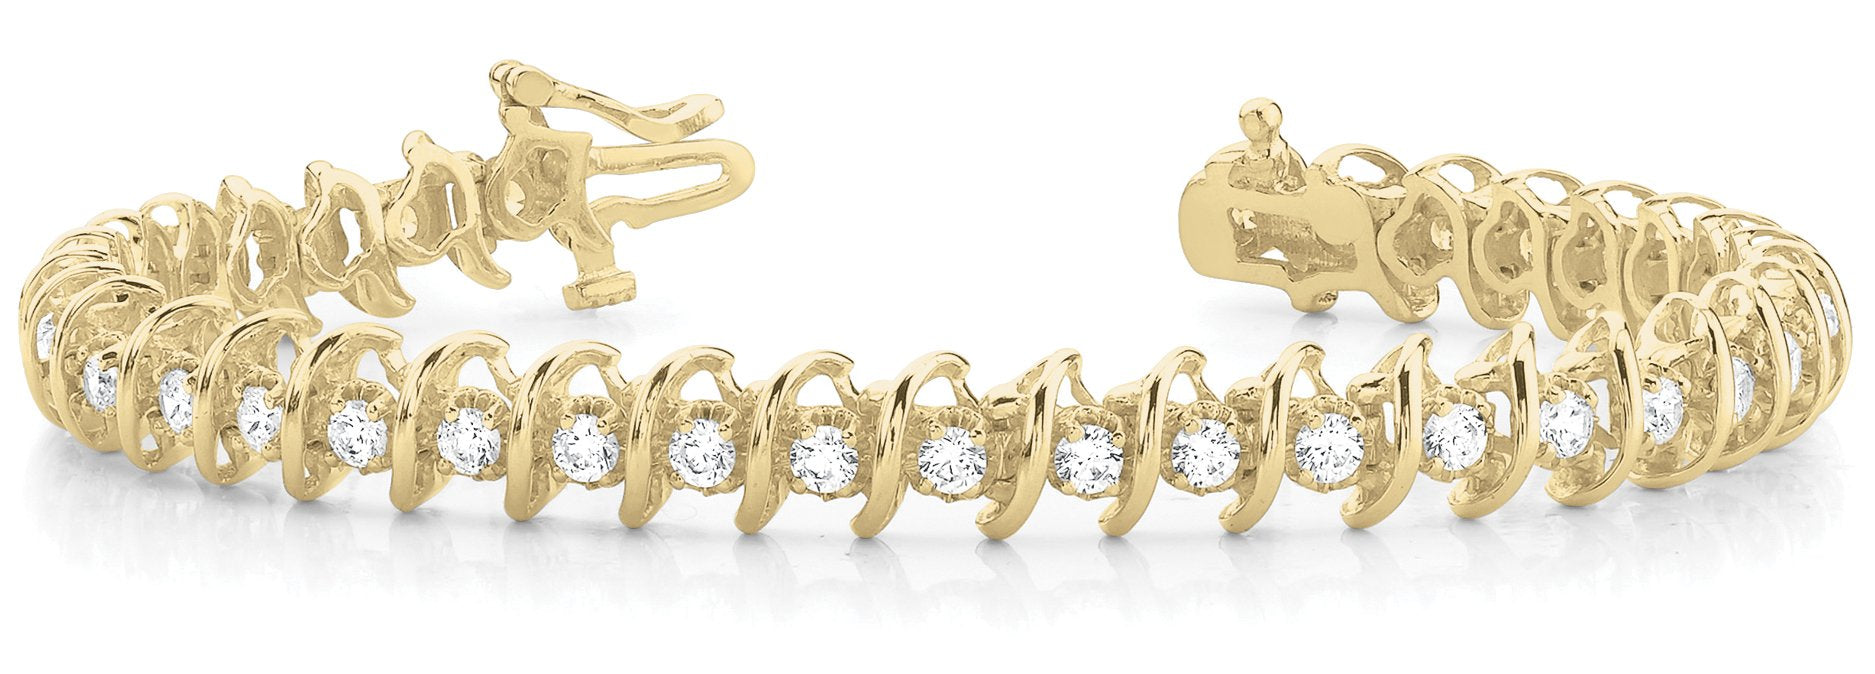 Fancy Diamond Bracelet Ladies 5.02ct tw - 14kt Yellow Gold